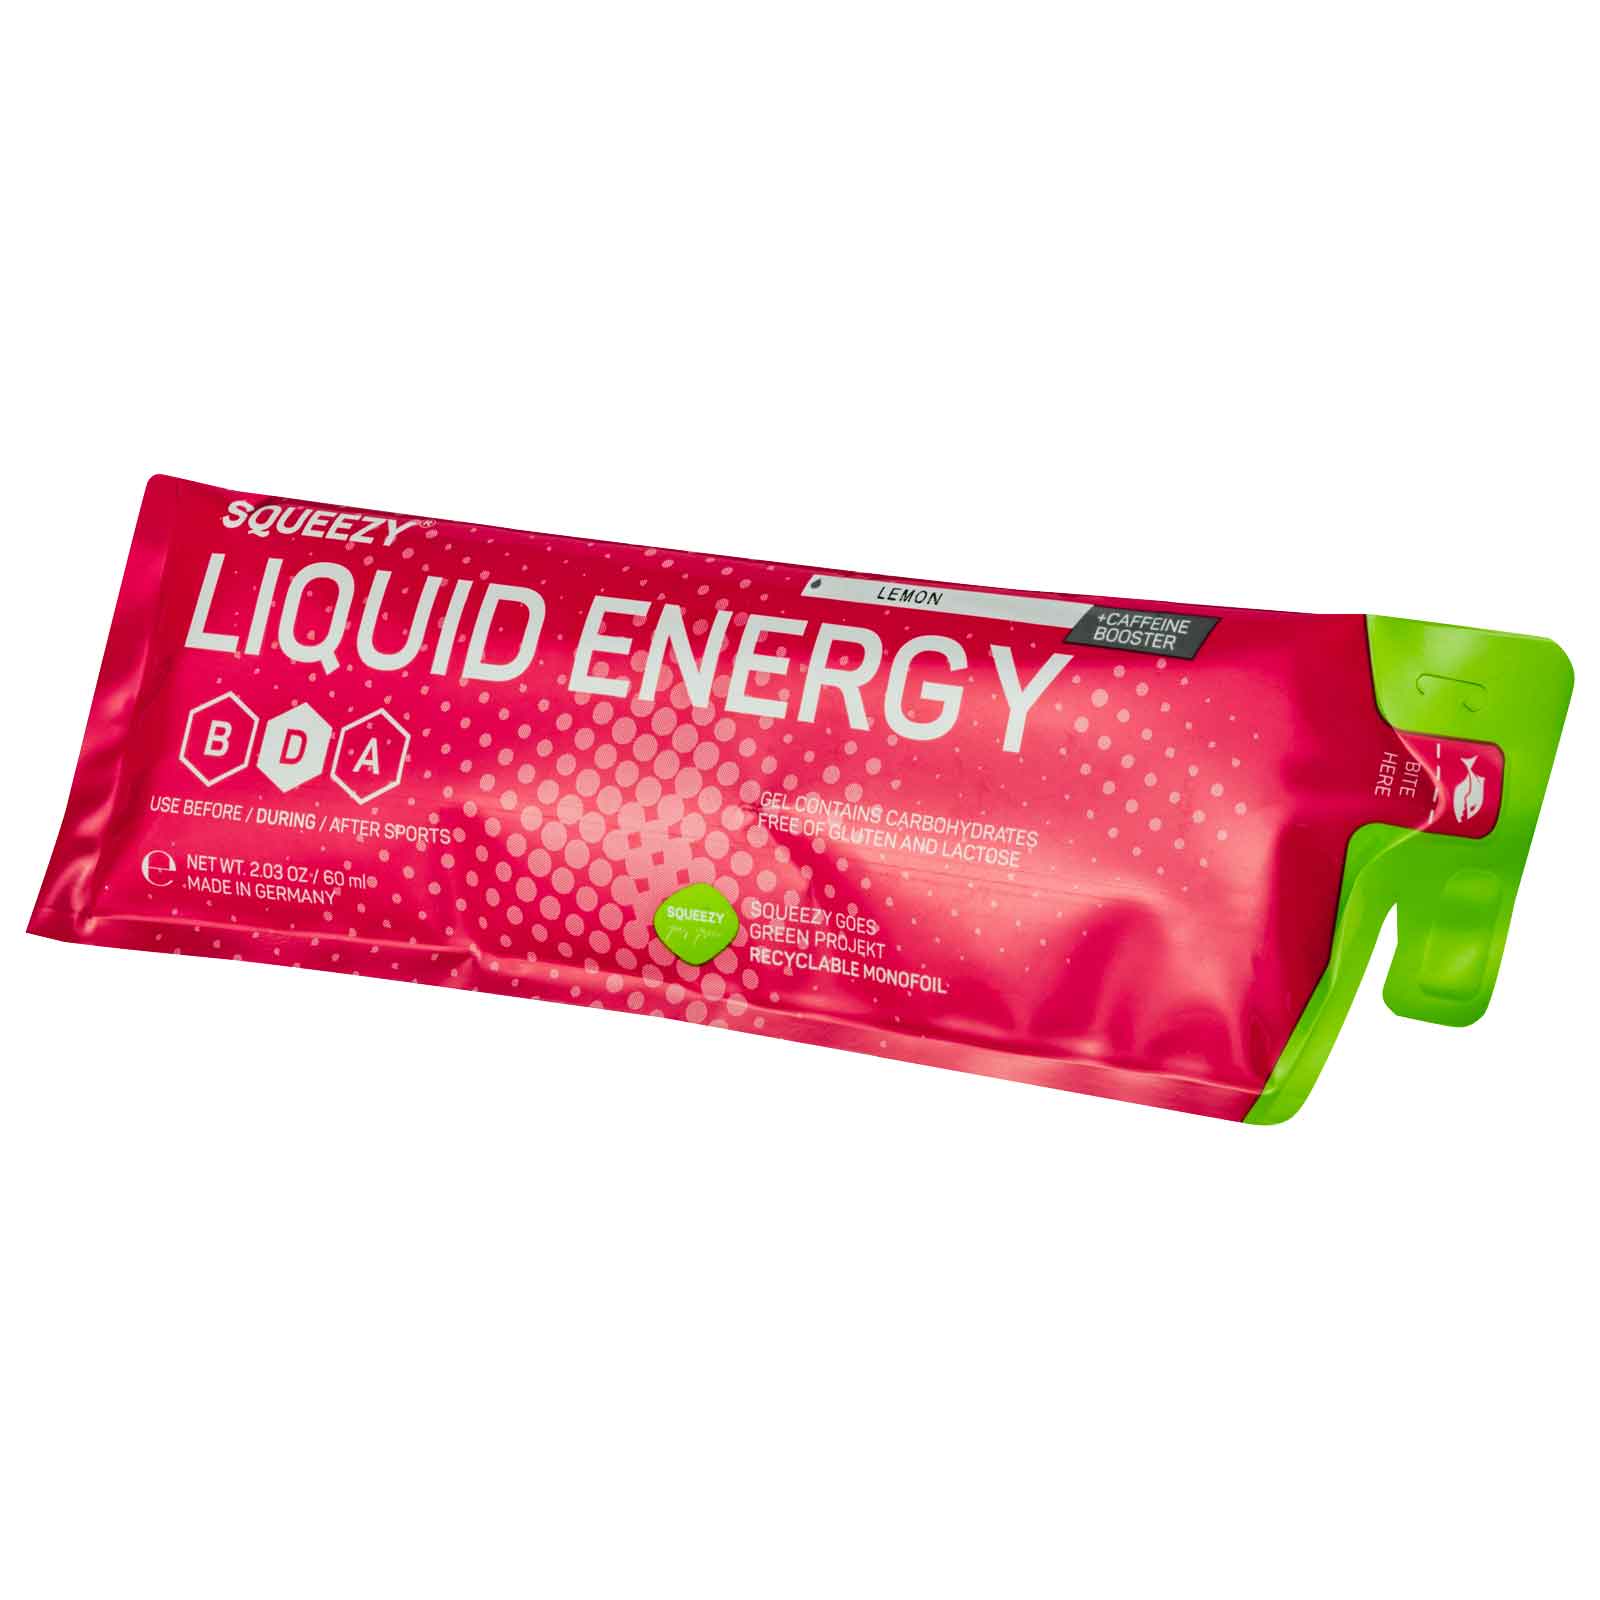 Productfoto van Squeezy Liquid Energy - Koolhydraatgel + Cafeïne - 4x60ml